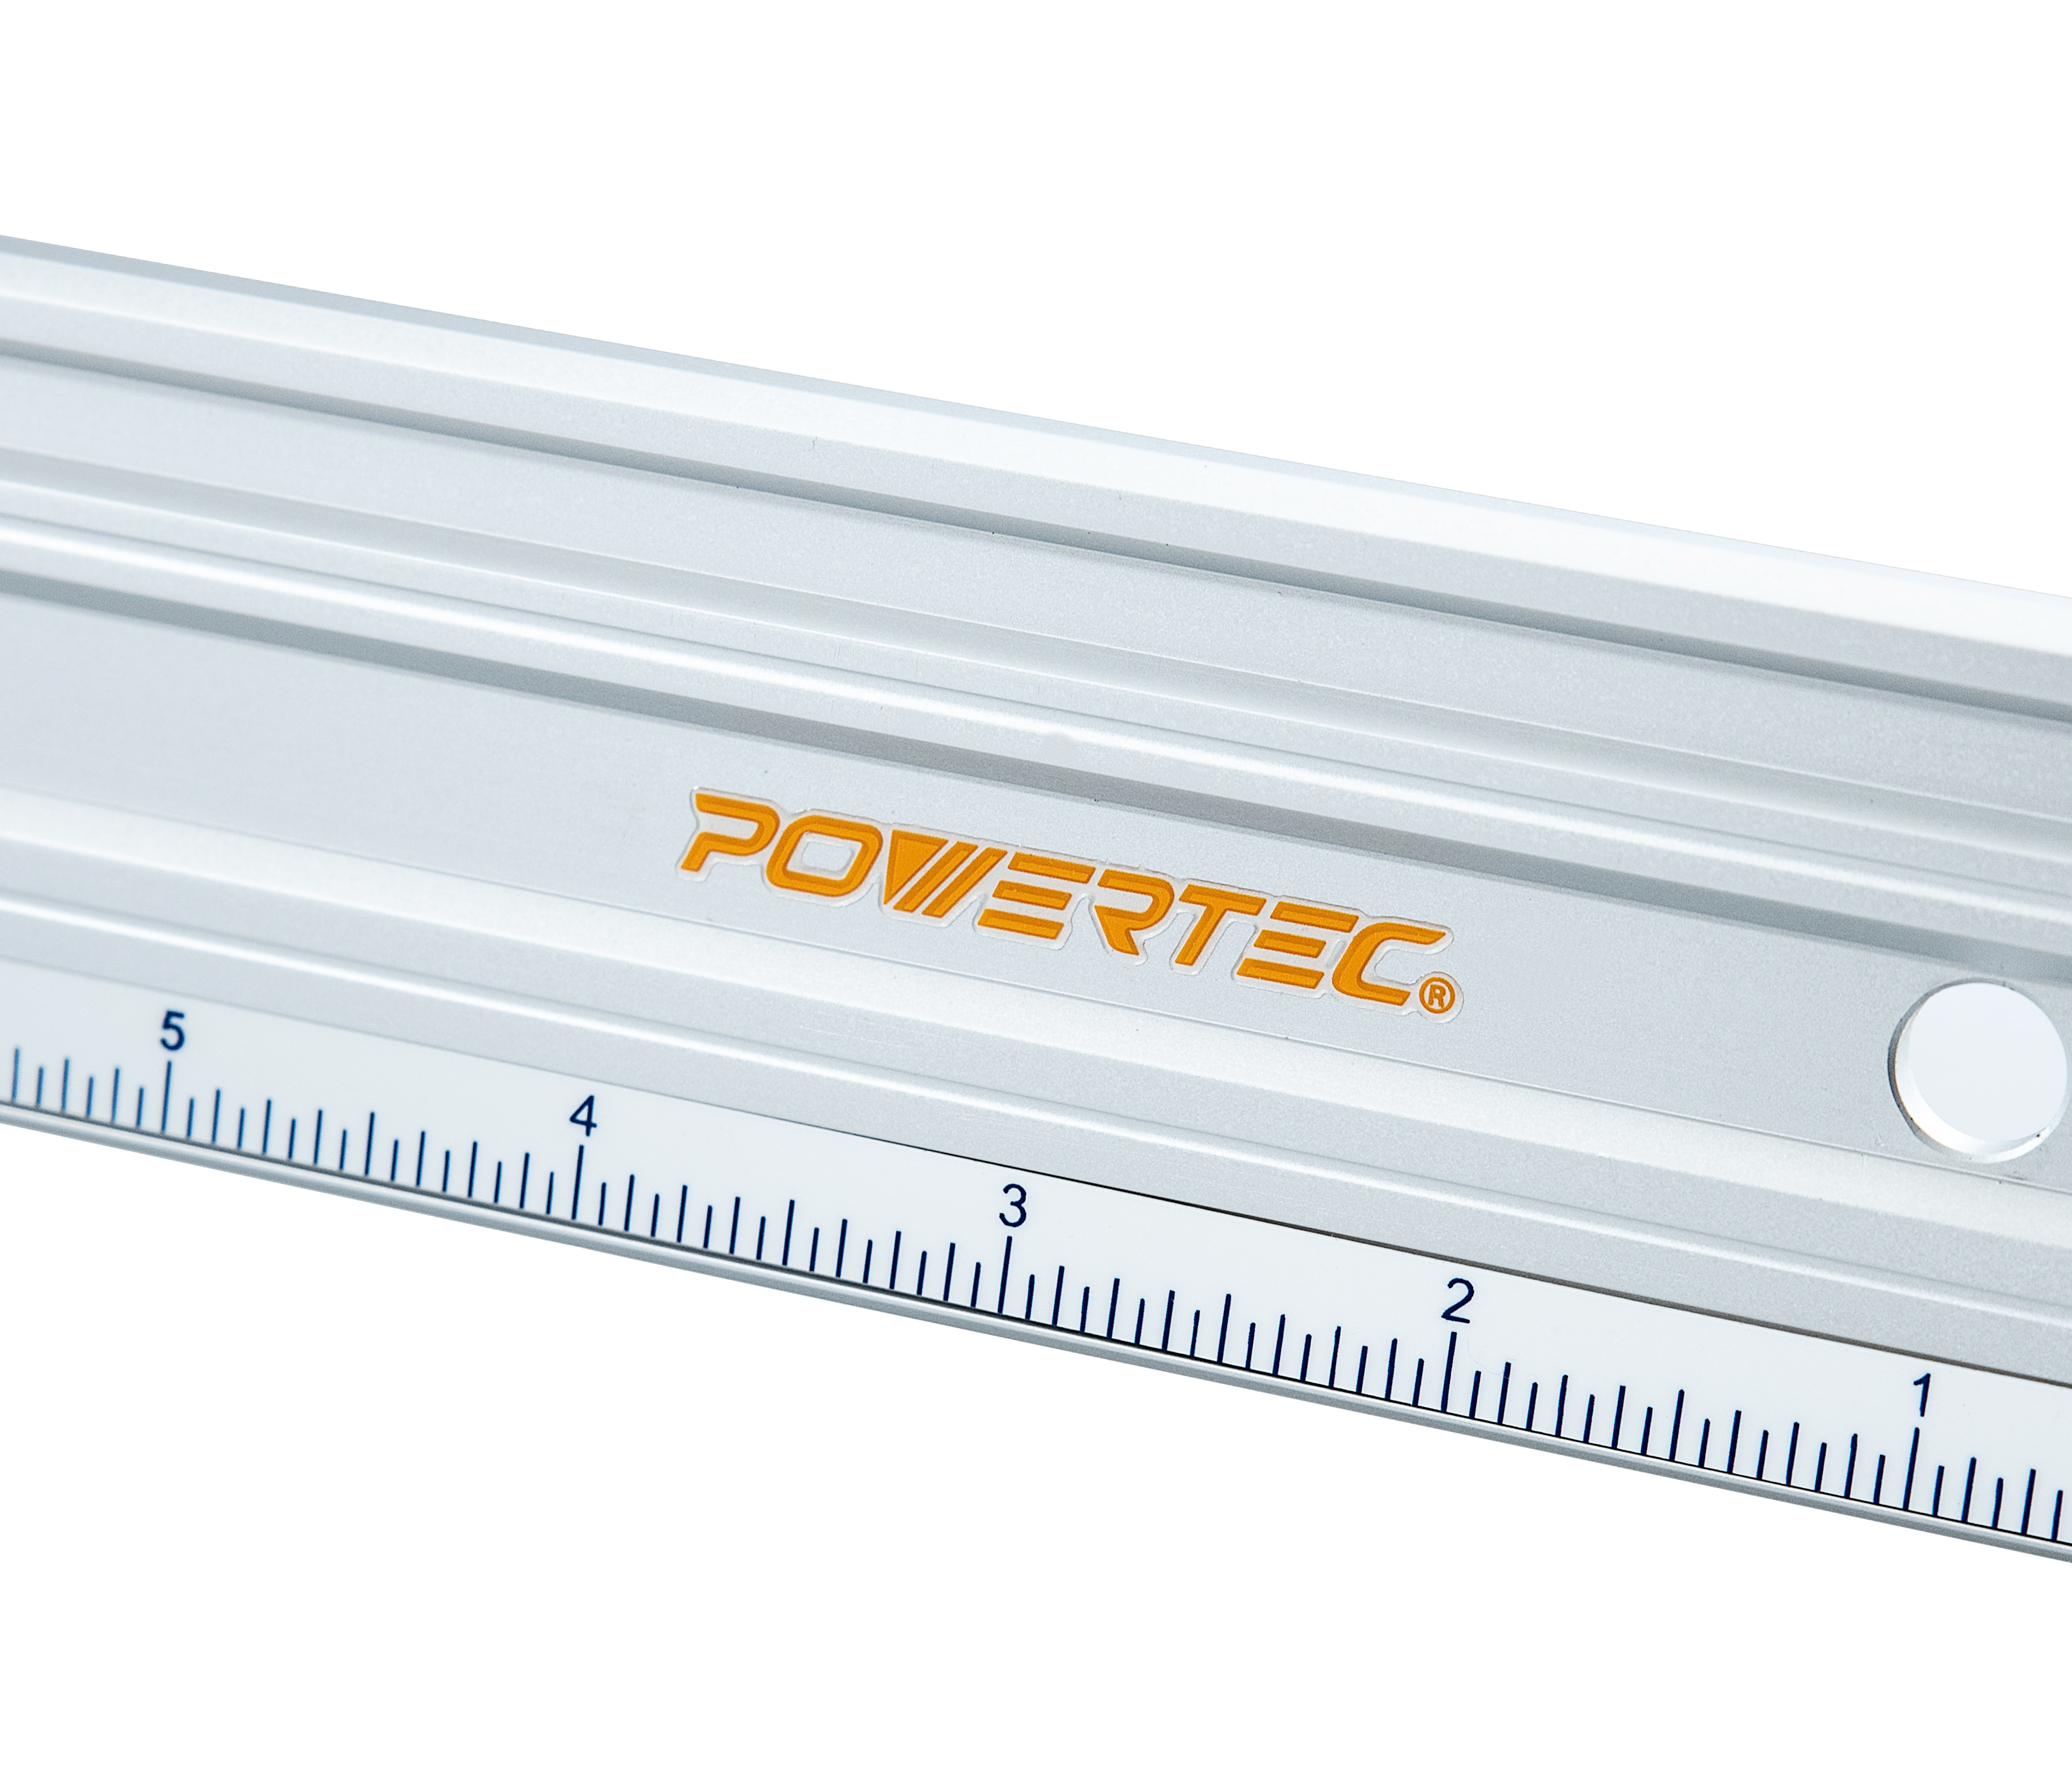 POWERTEC 38-inch Anodized Aluminum Straight Edge Ruler, Metal